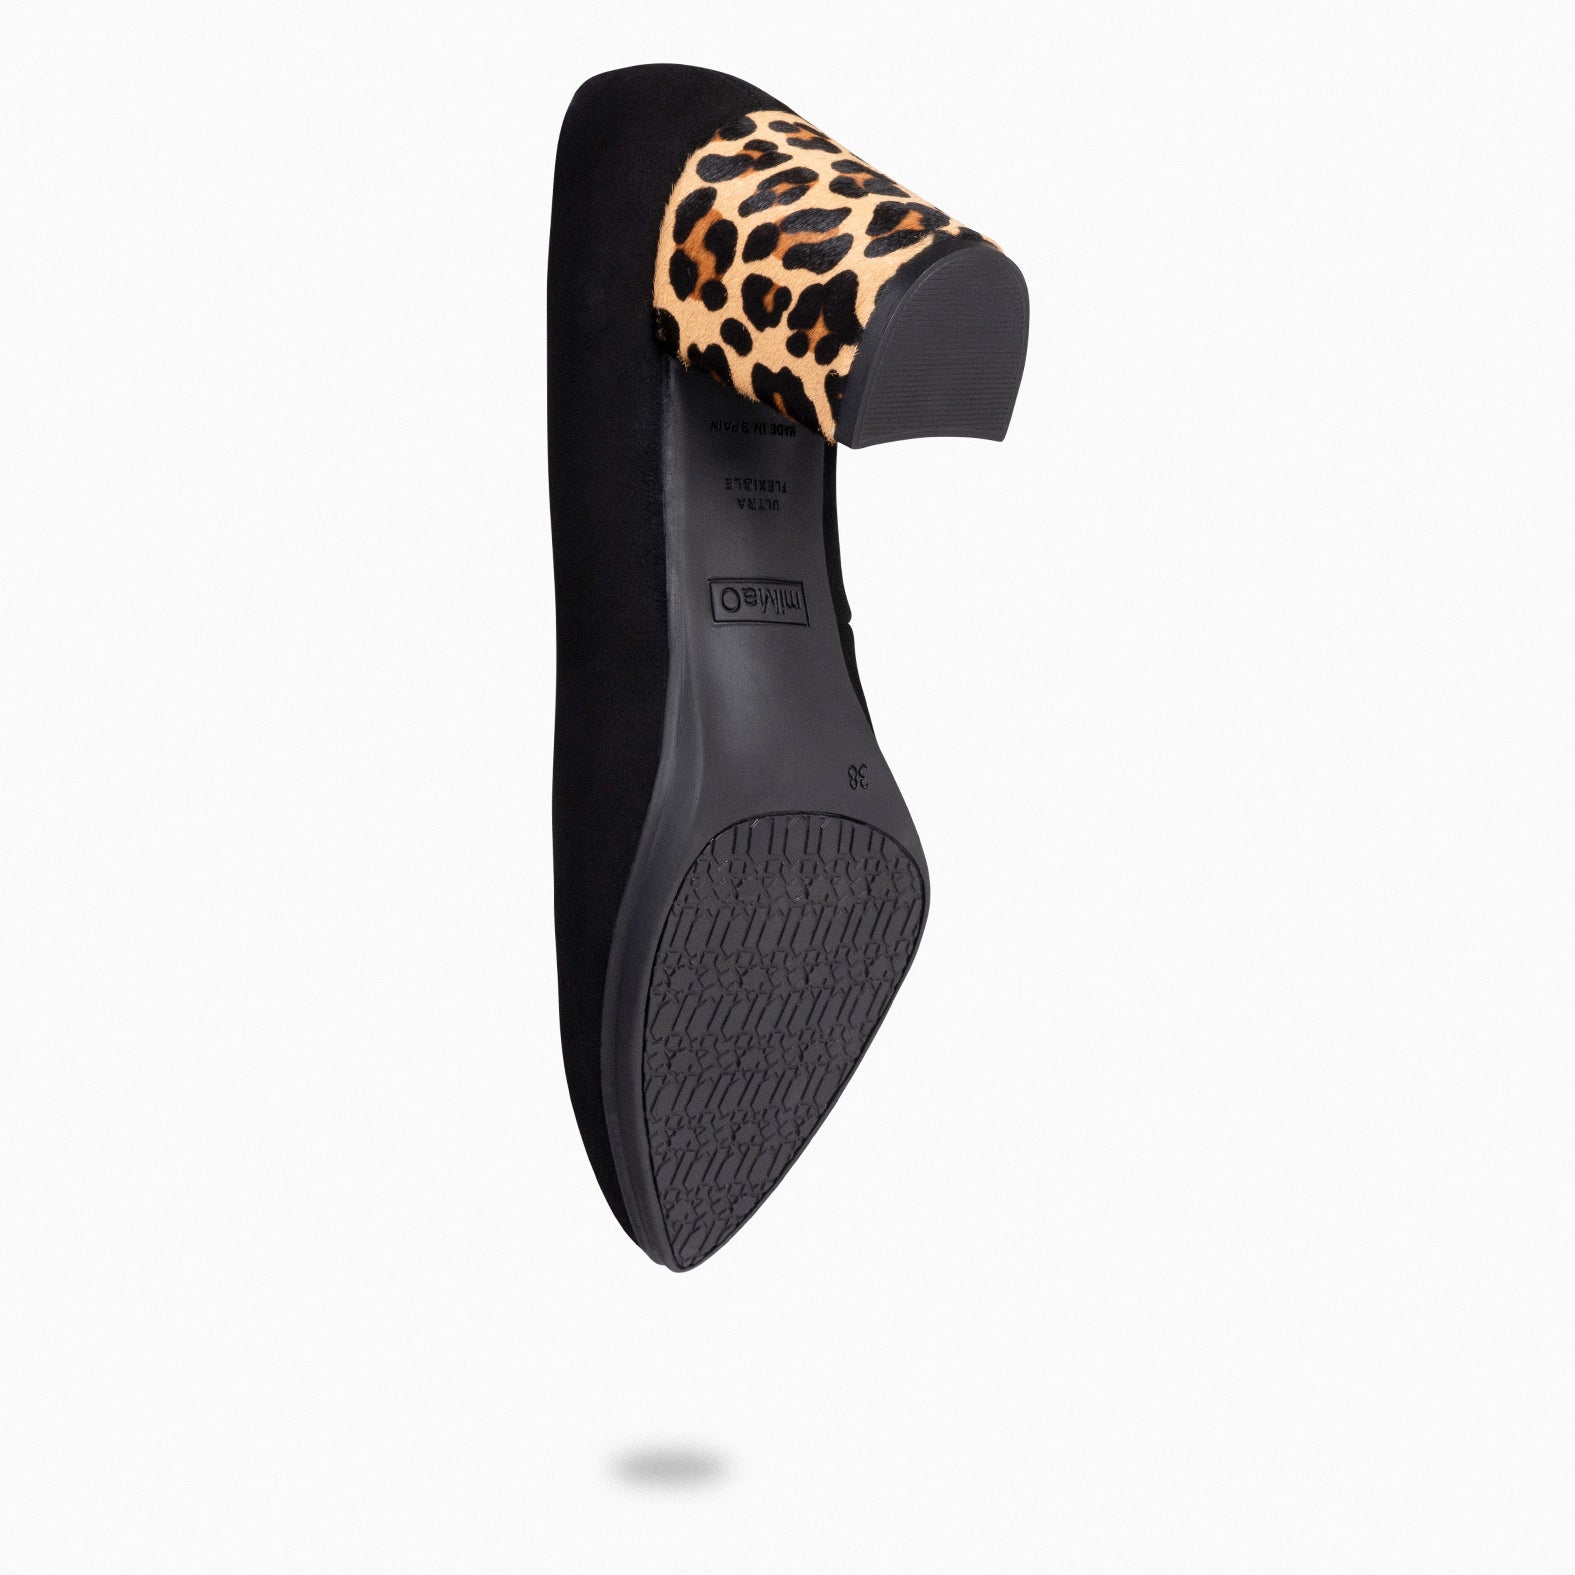 URBAN S WILD – LEOPARD animal print mid heels 